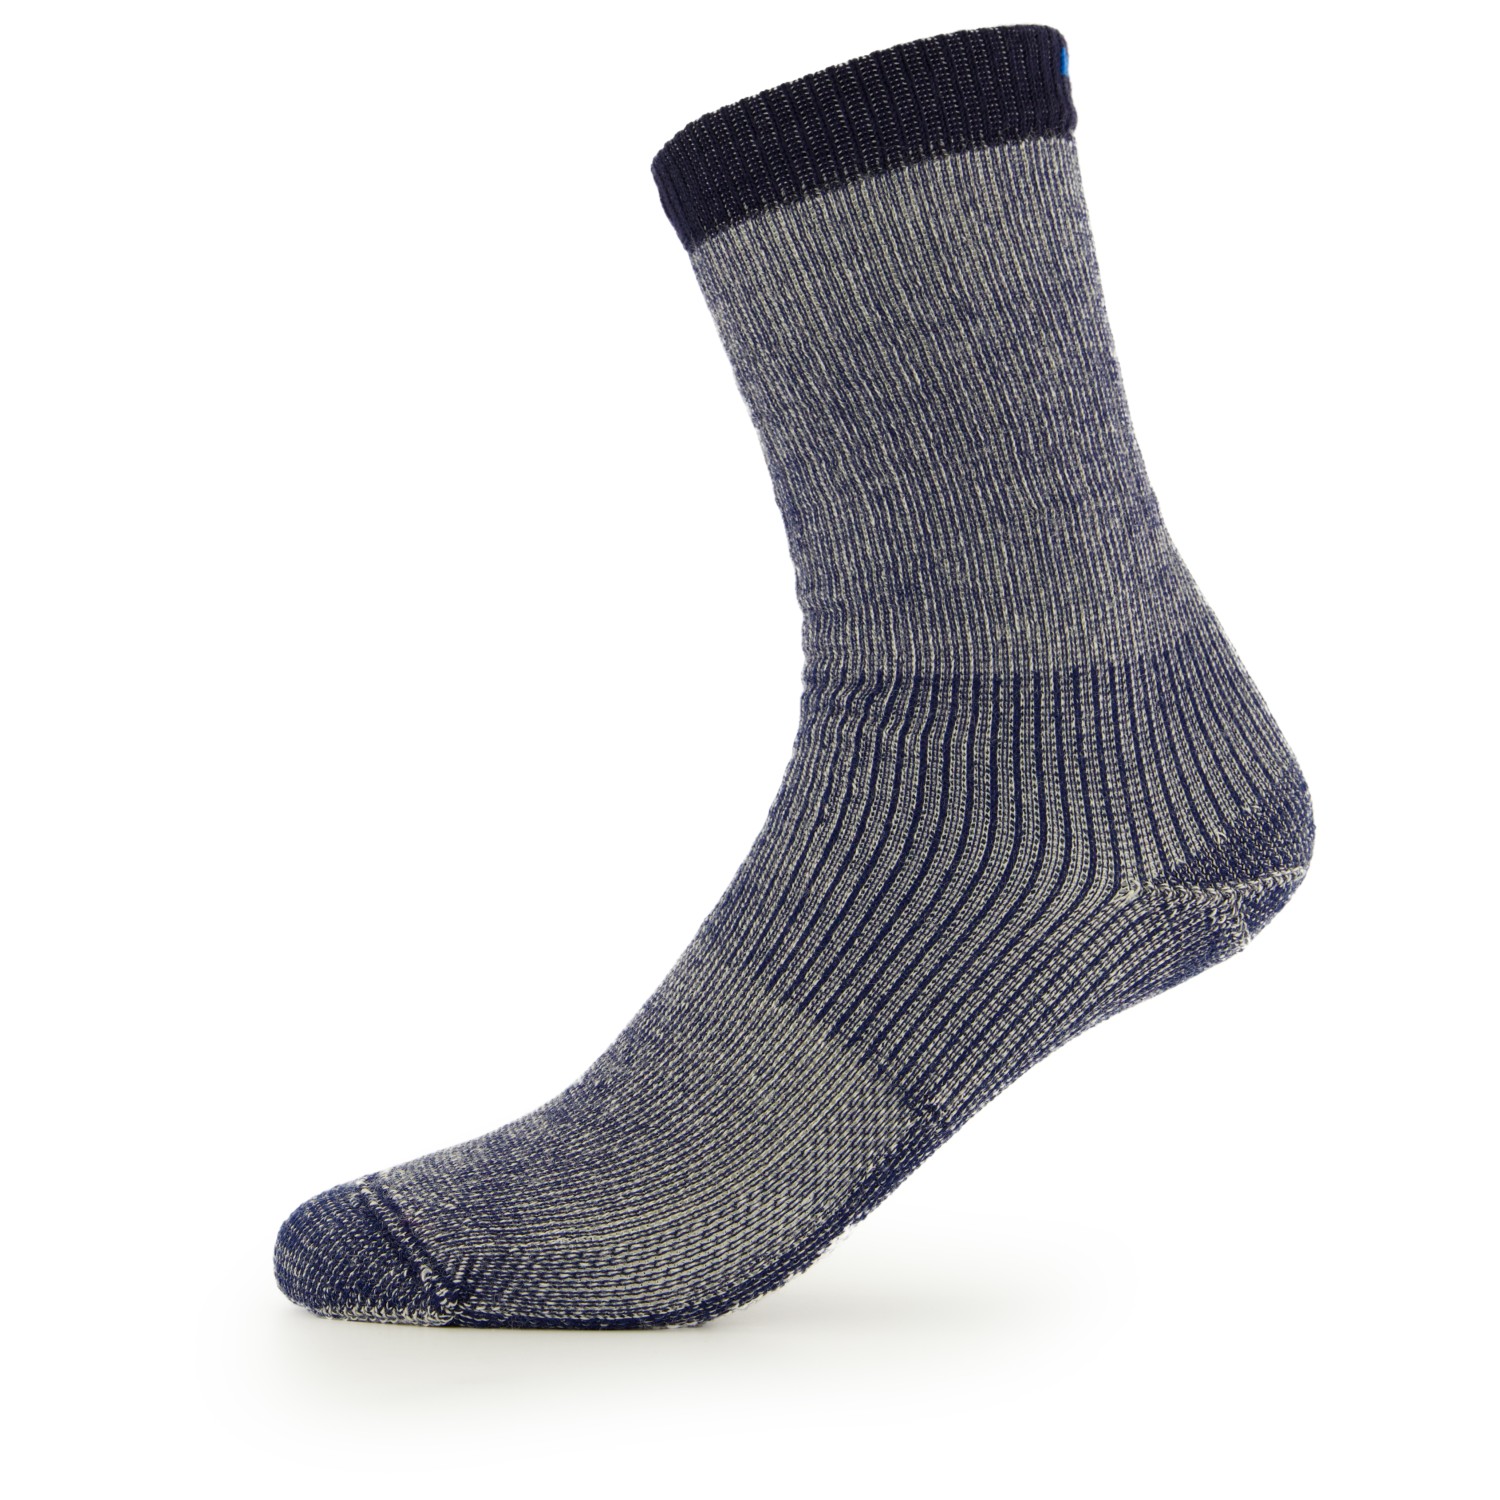 Походные носки Stoic Merino Wool Cushion Heavy Socks, синий men wool merino socks for winter thermal warm thick hiking boot heavy soft cozy socks for cold weather 5 pack